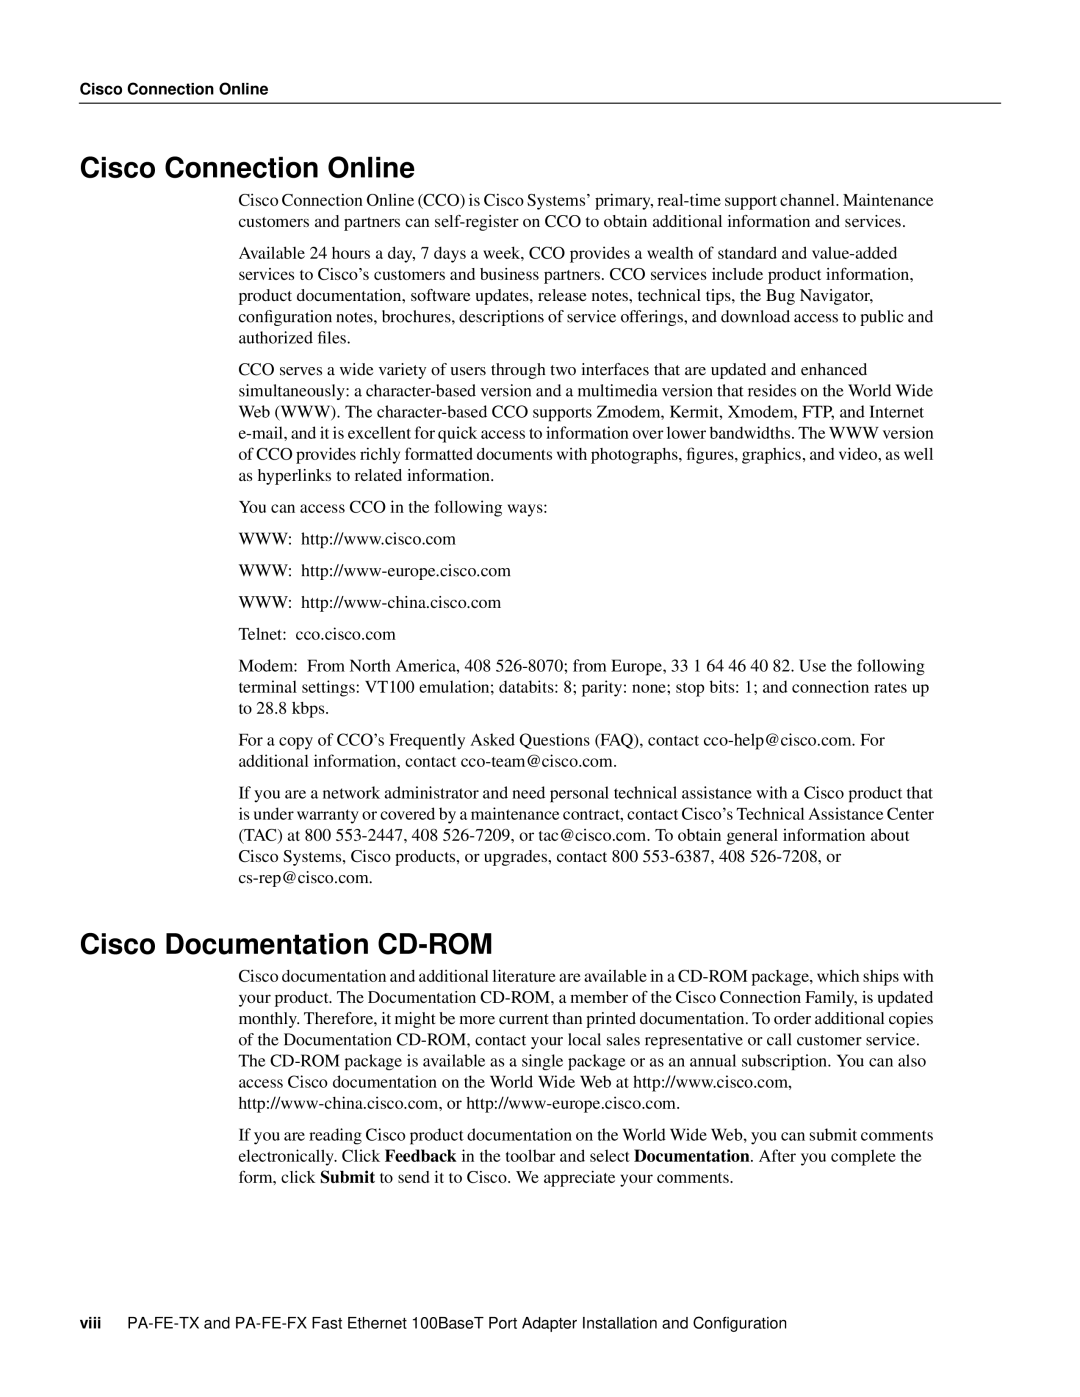 Cisco Systems PA-FE-TX, PA-FE-FX manual Cisco Connection Online, Cisco Documentation CD-ROM 